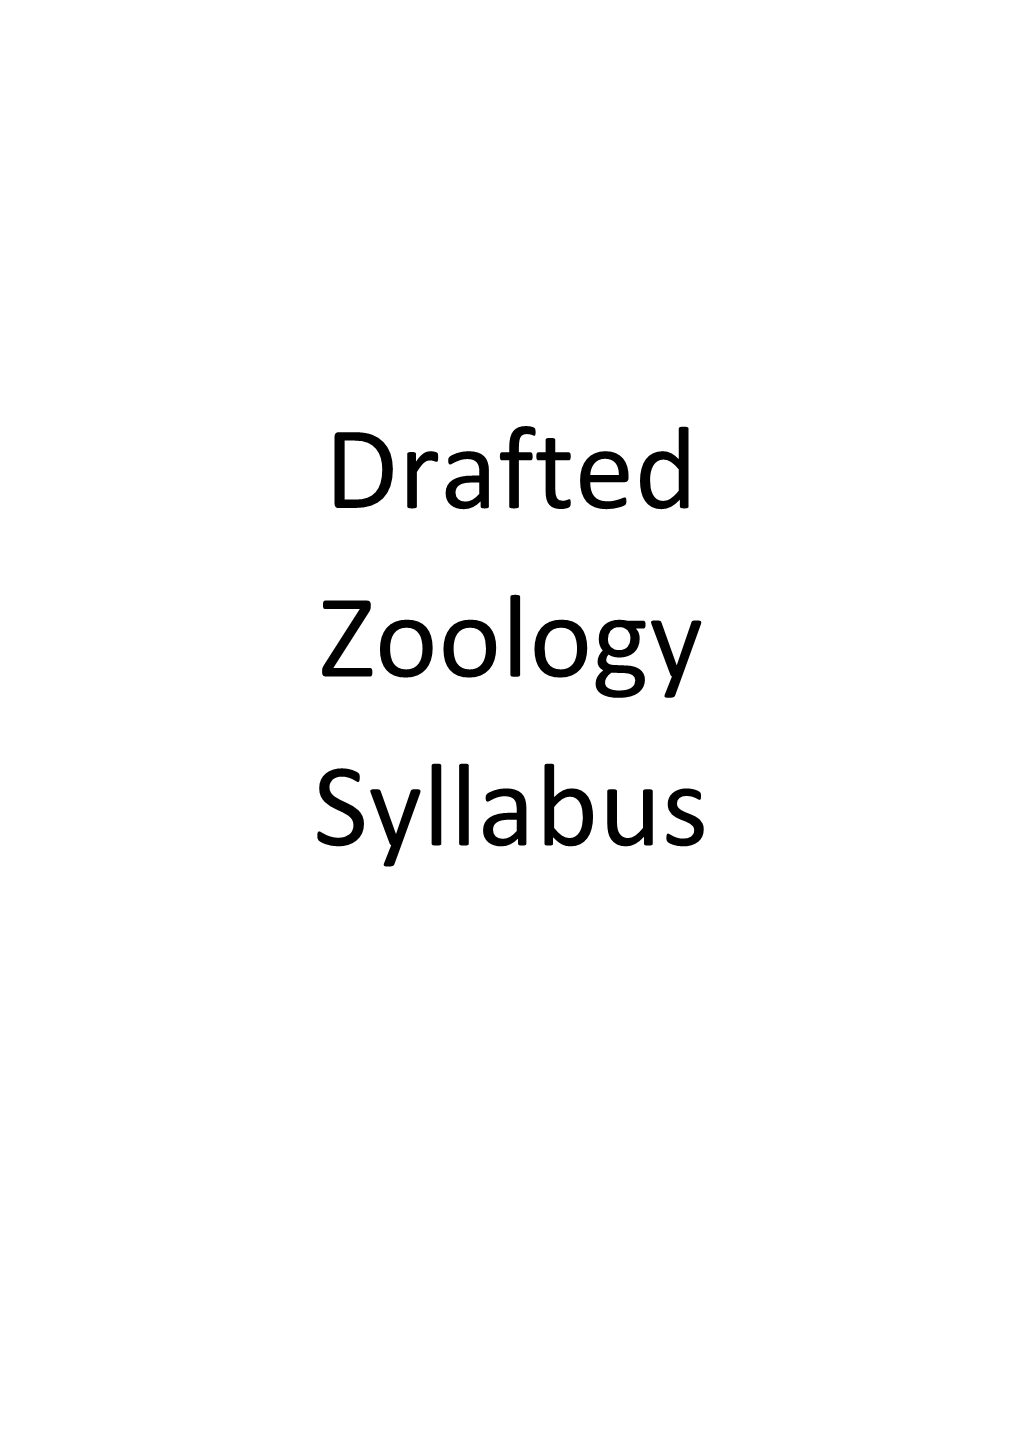 Drafted Zoology Syllabus